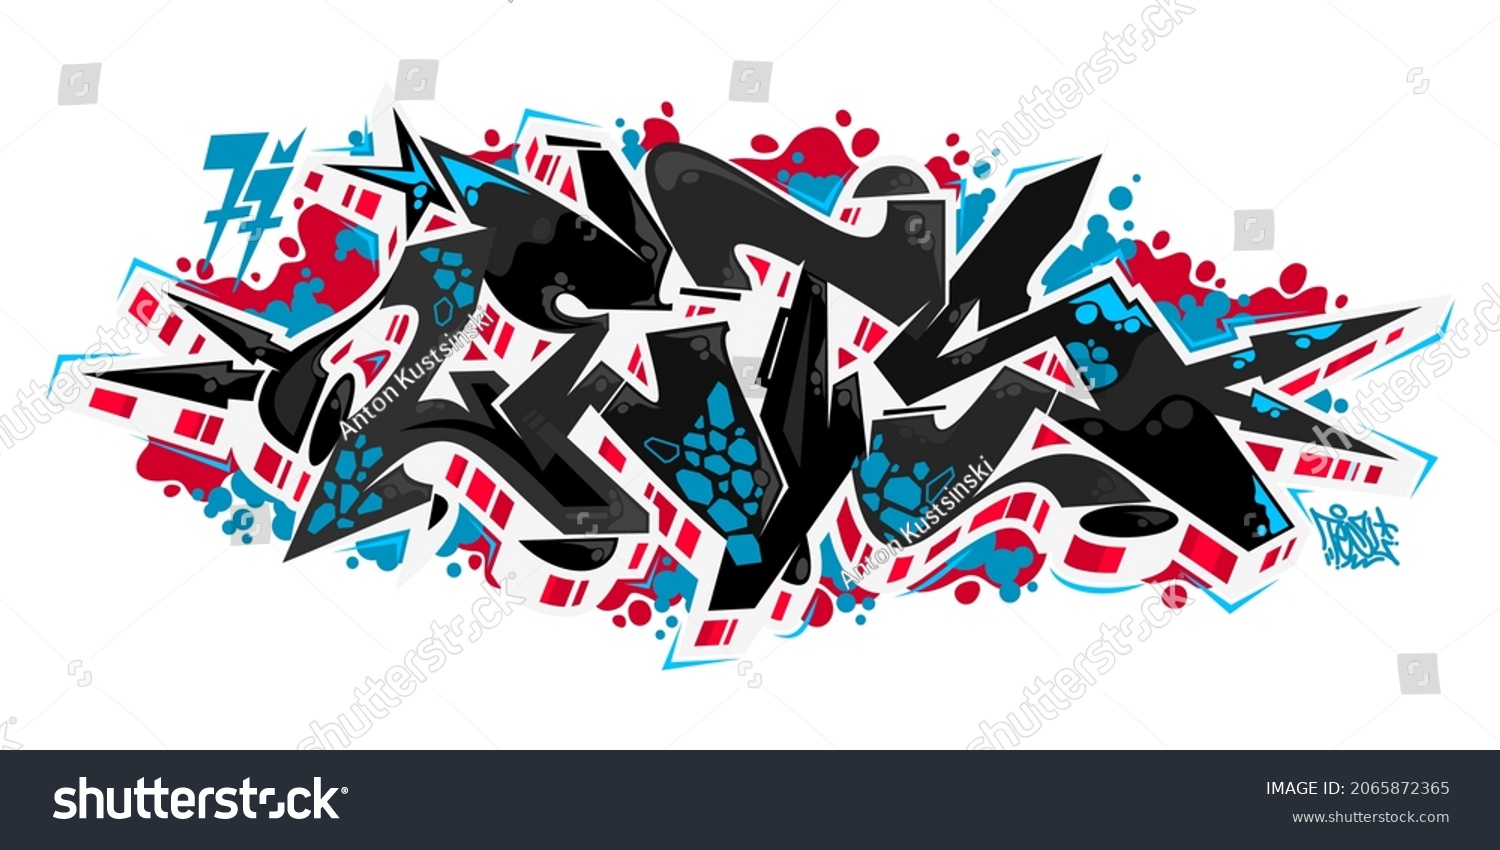 wildstyle graffiti generator